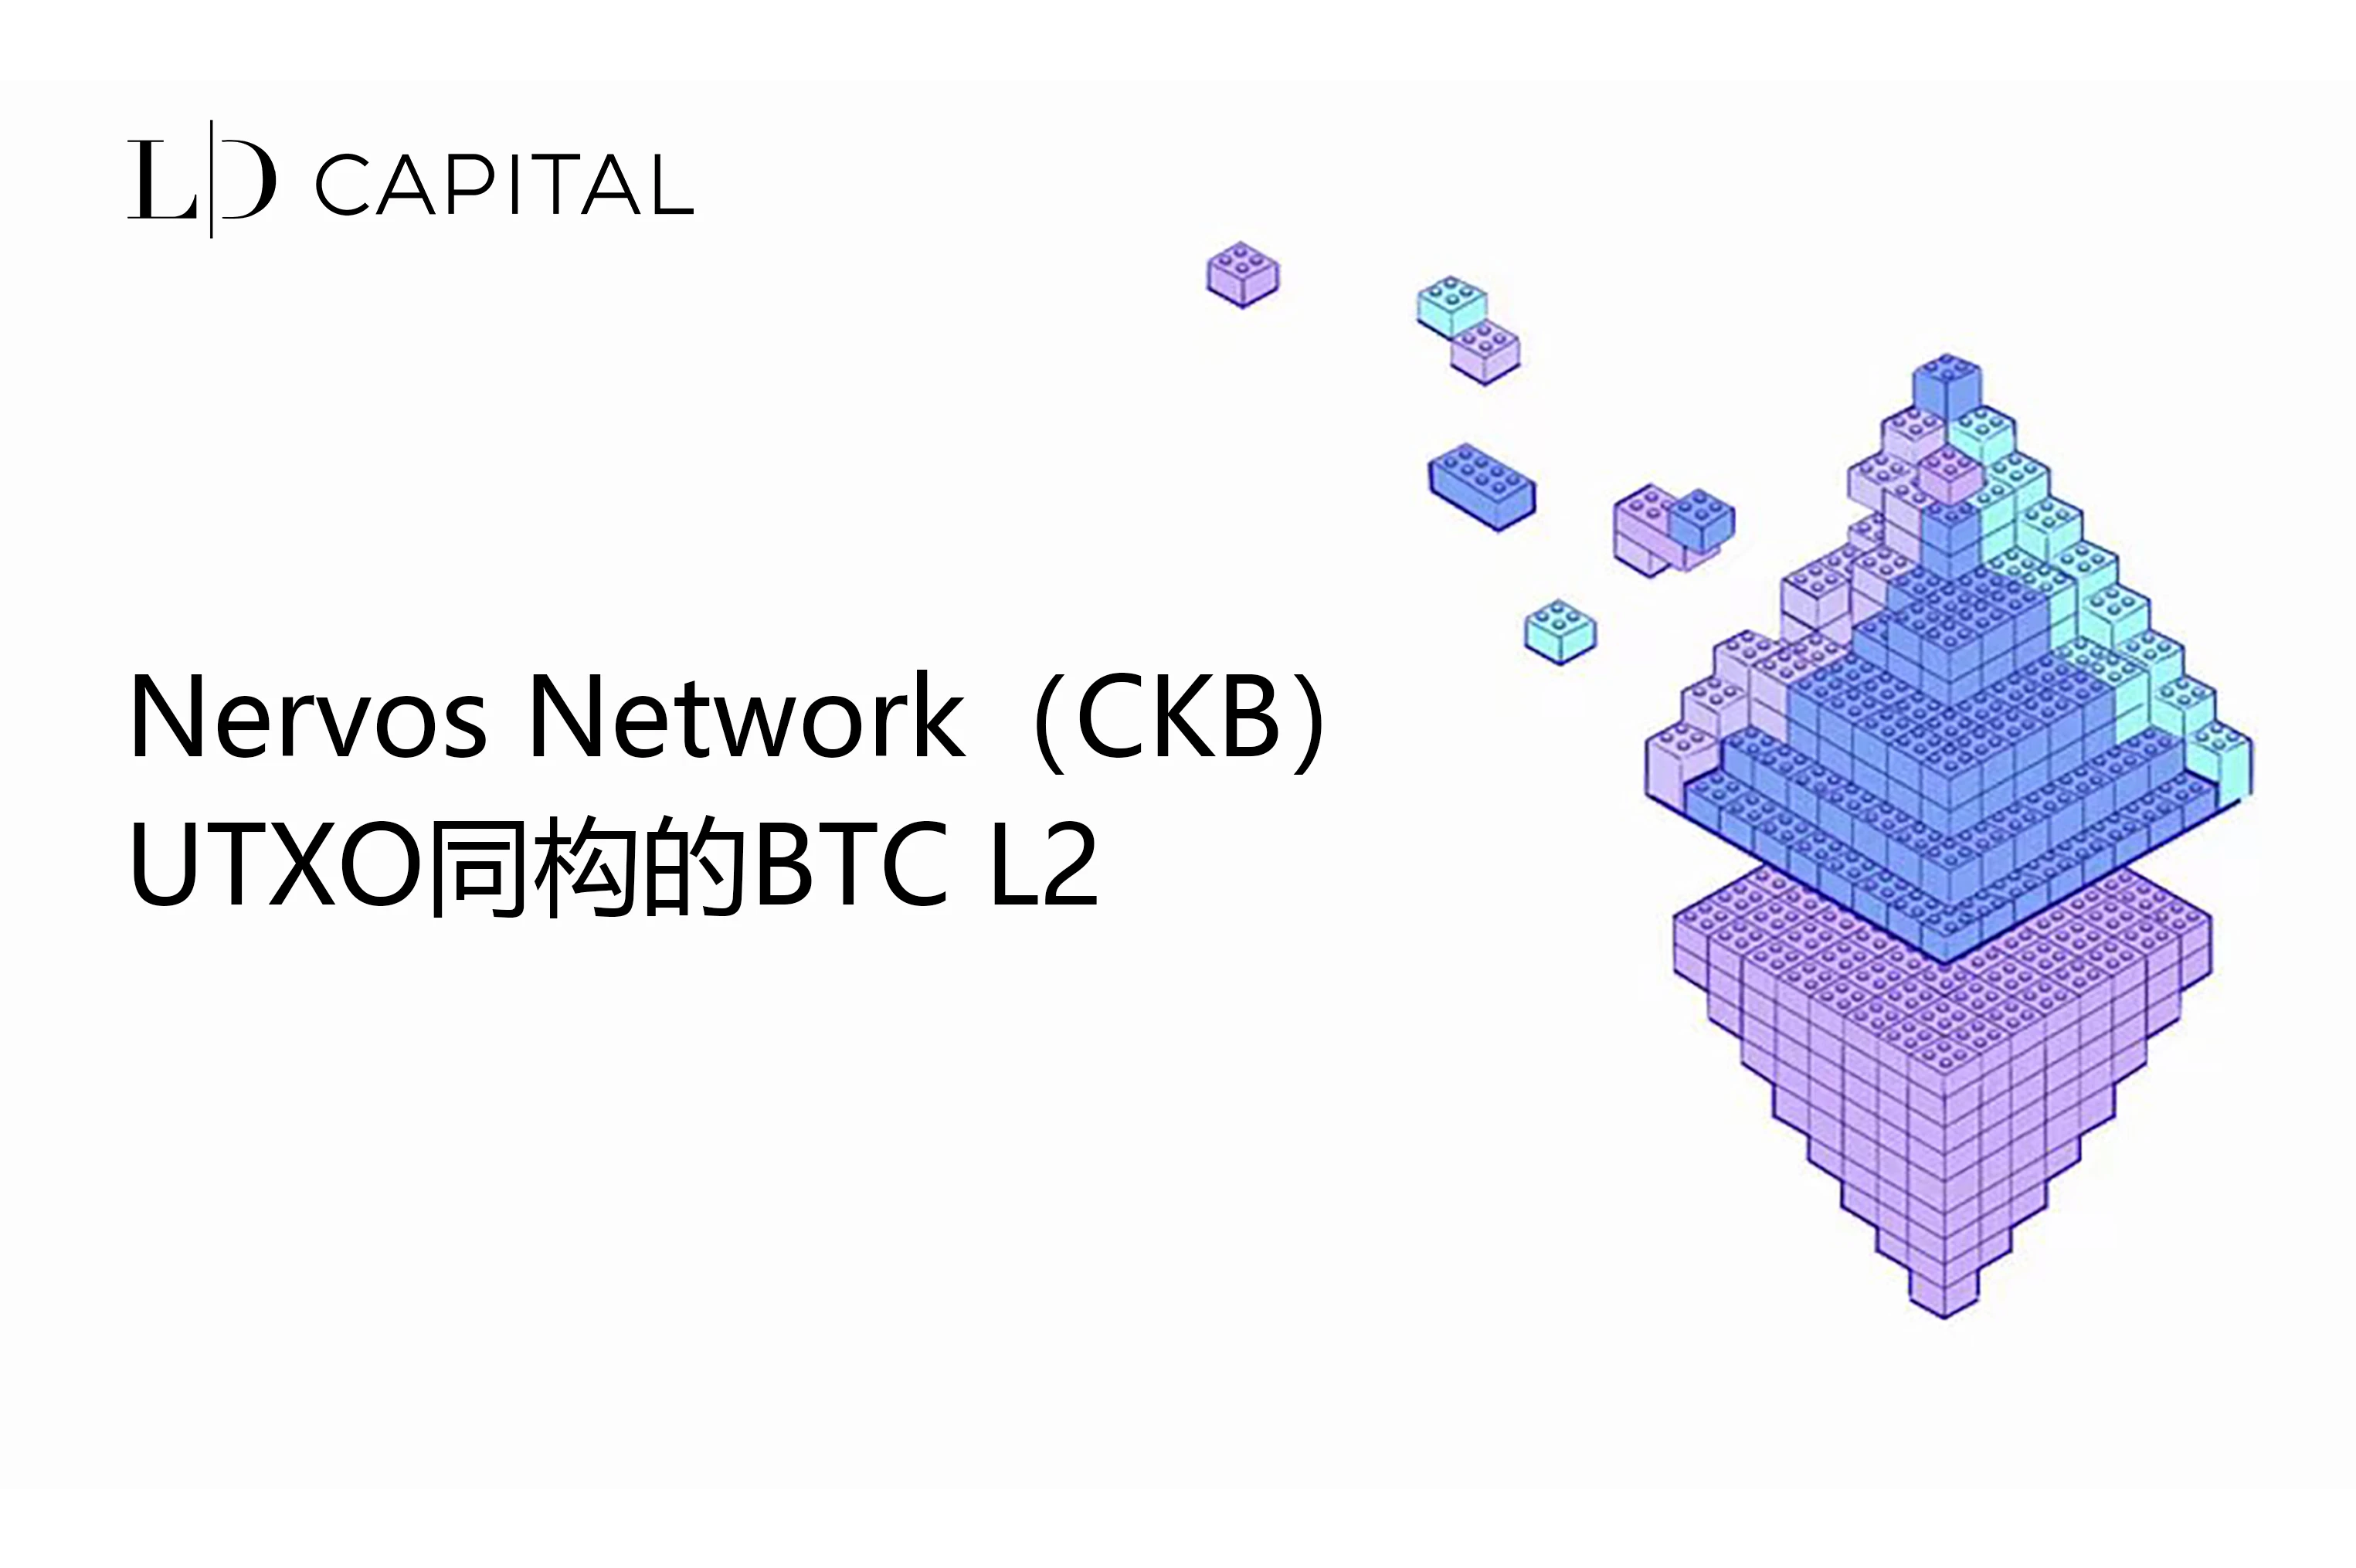 LD Capital：解读Nervos Network（CKB），UTXO同构的BTC L2